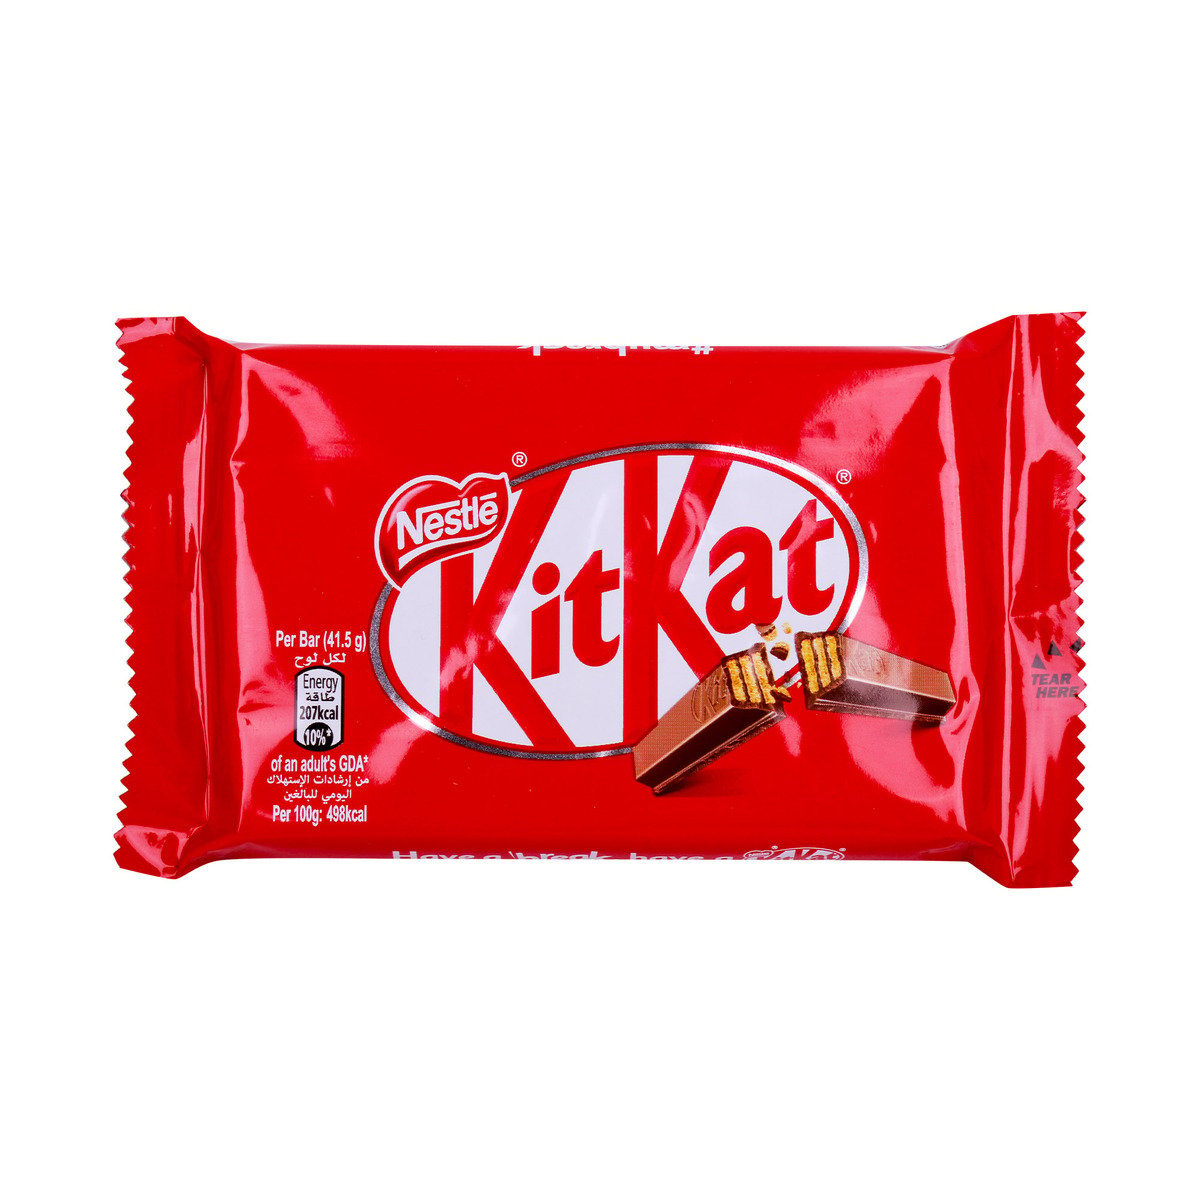 Nestle KitKat 4 Finger Extra Milk Chocolate & Cocoa 24 x 41.5 g